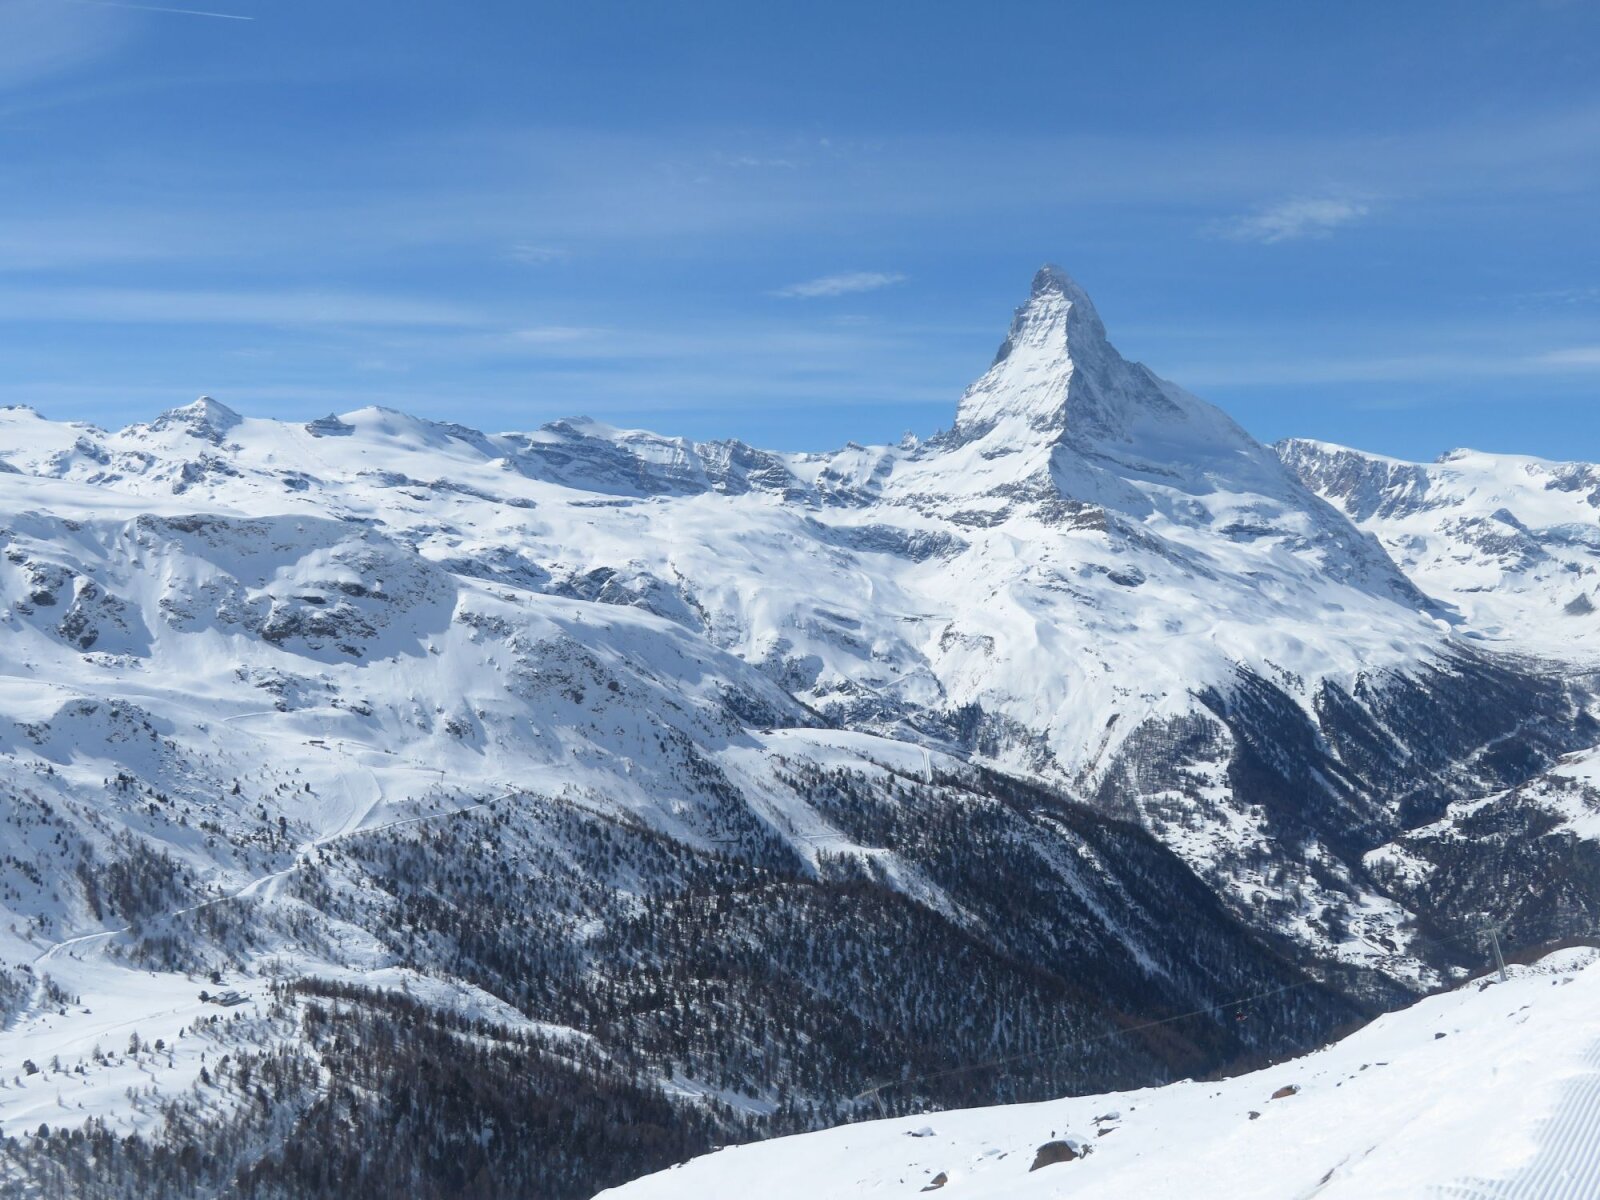 A Matterhorn a 11-es pálya (Rothorn - Blauherd) felől